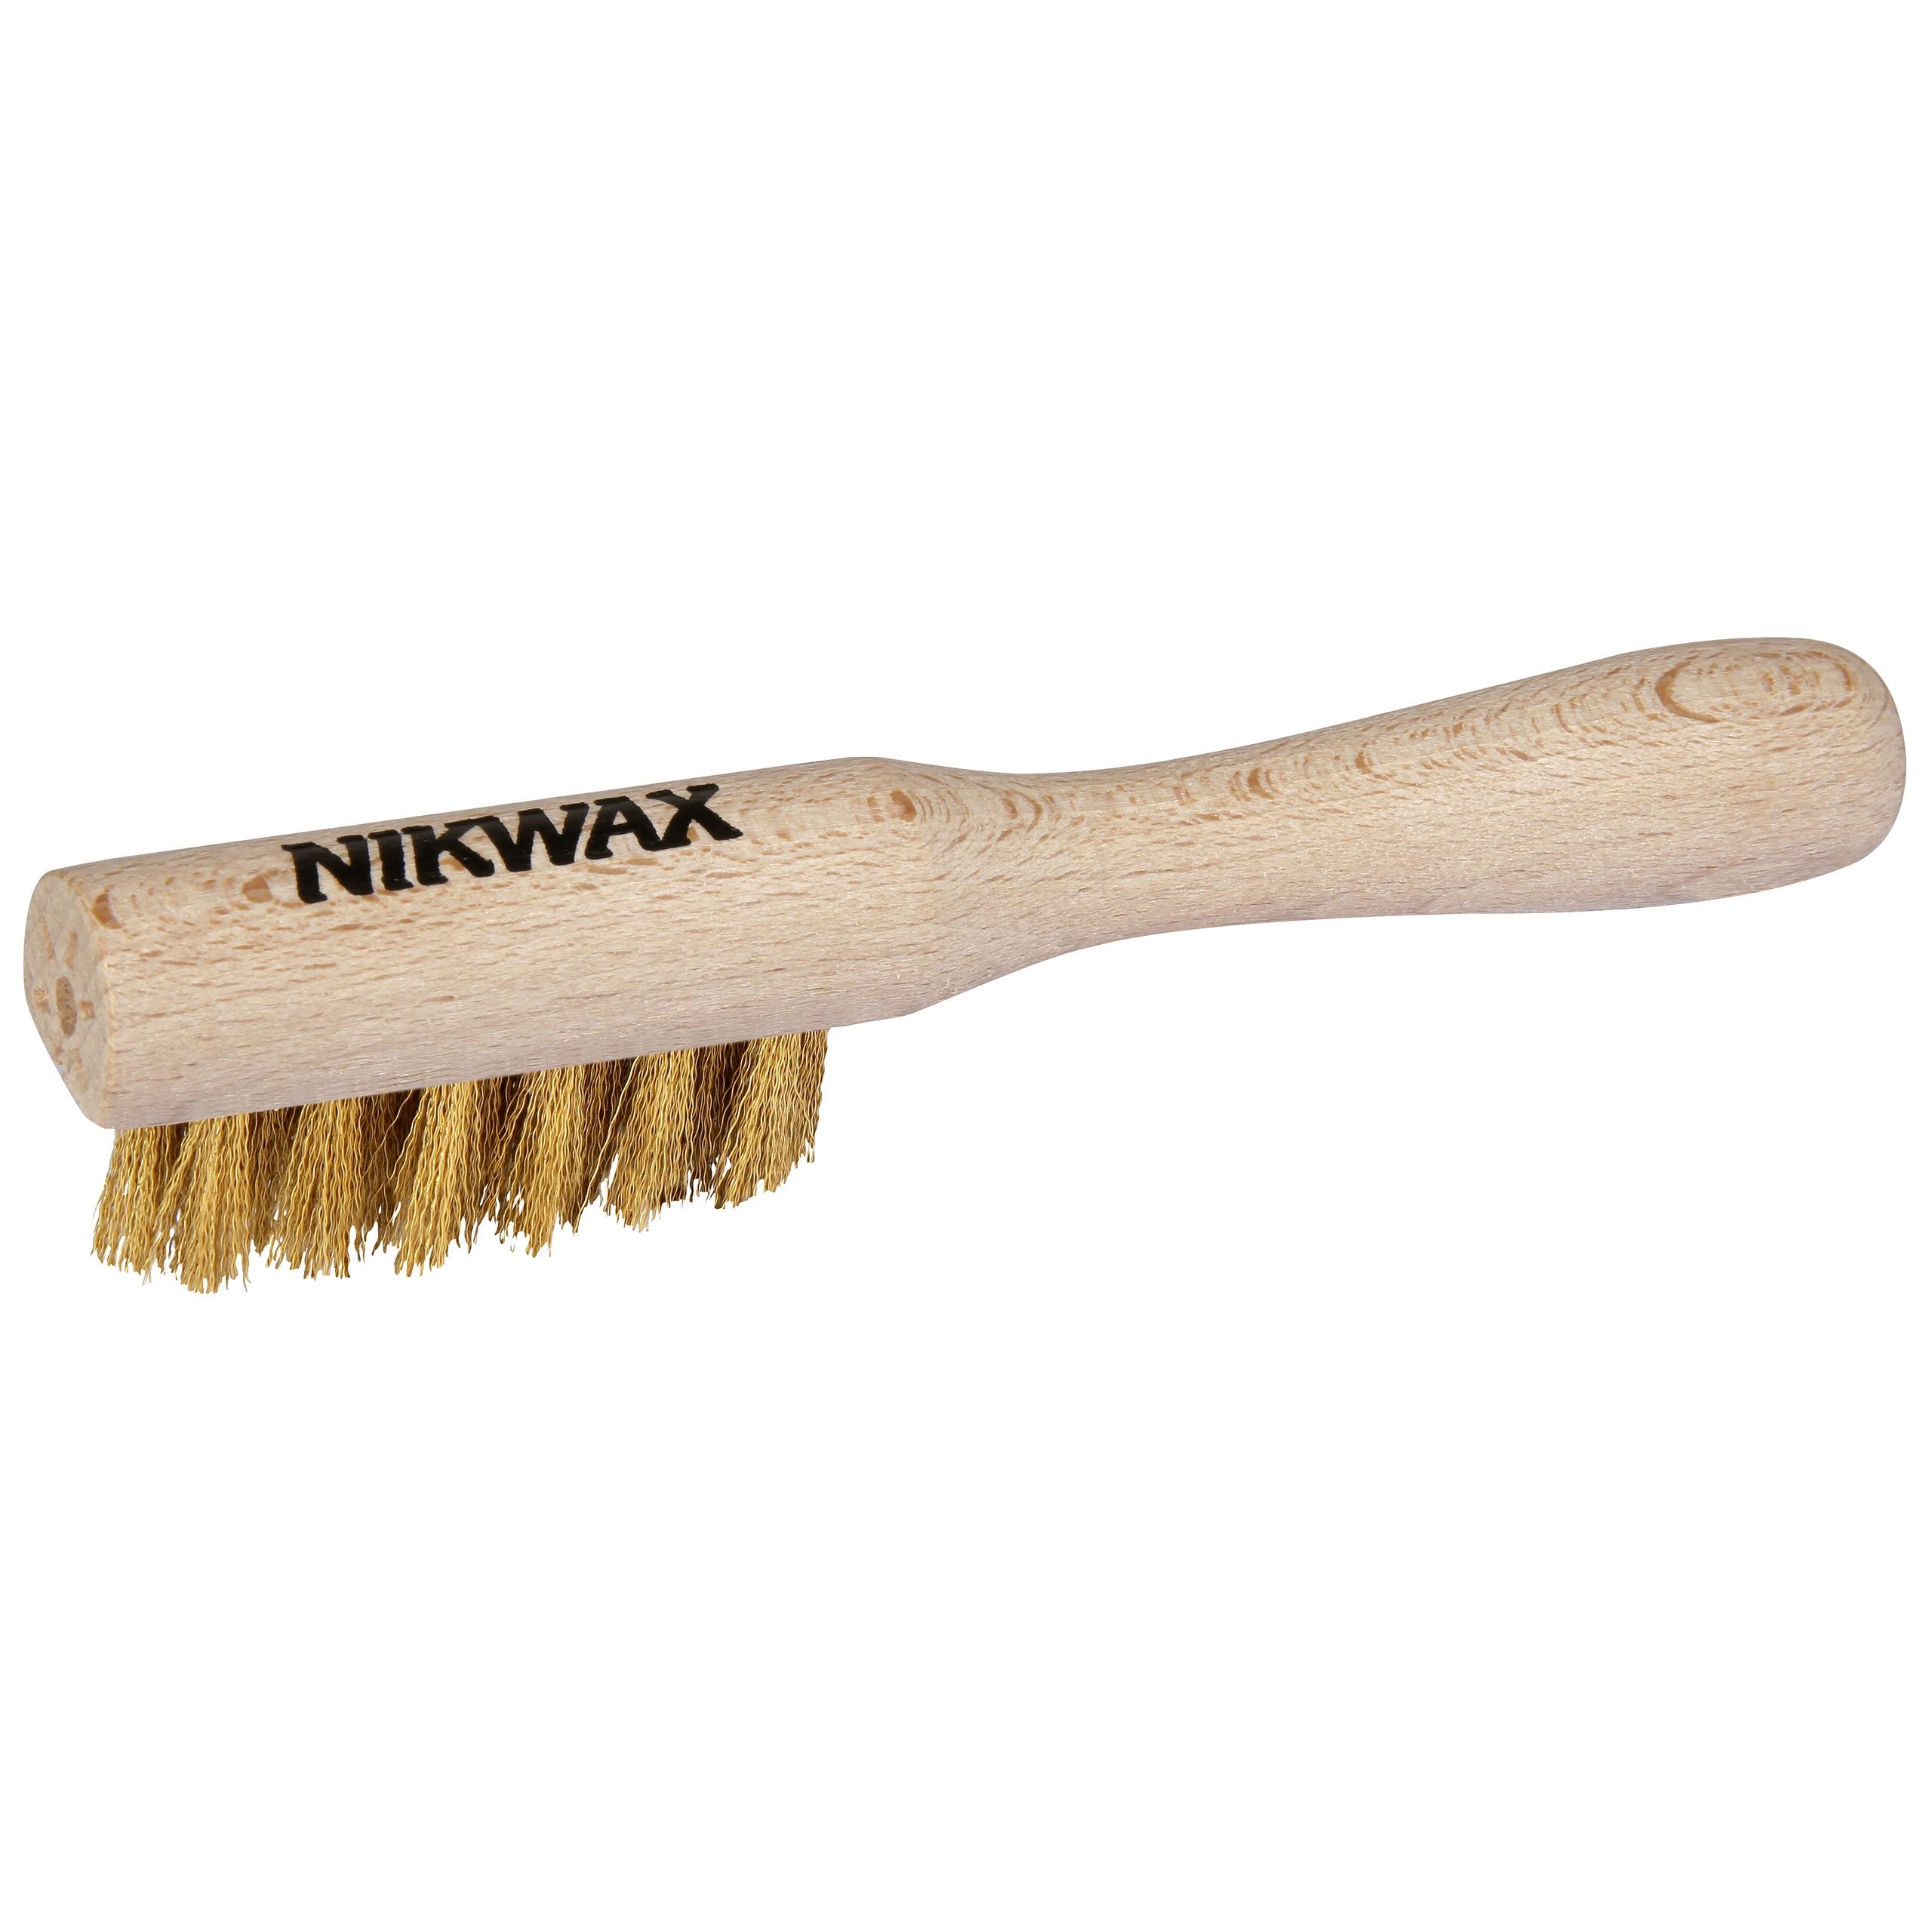 Nikwax Suede Clean Brush